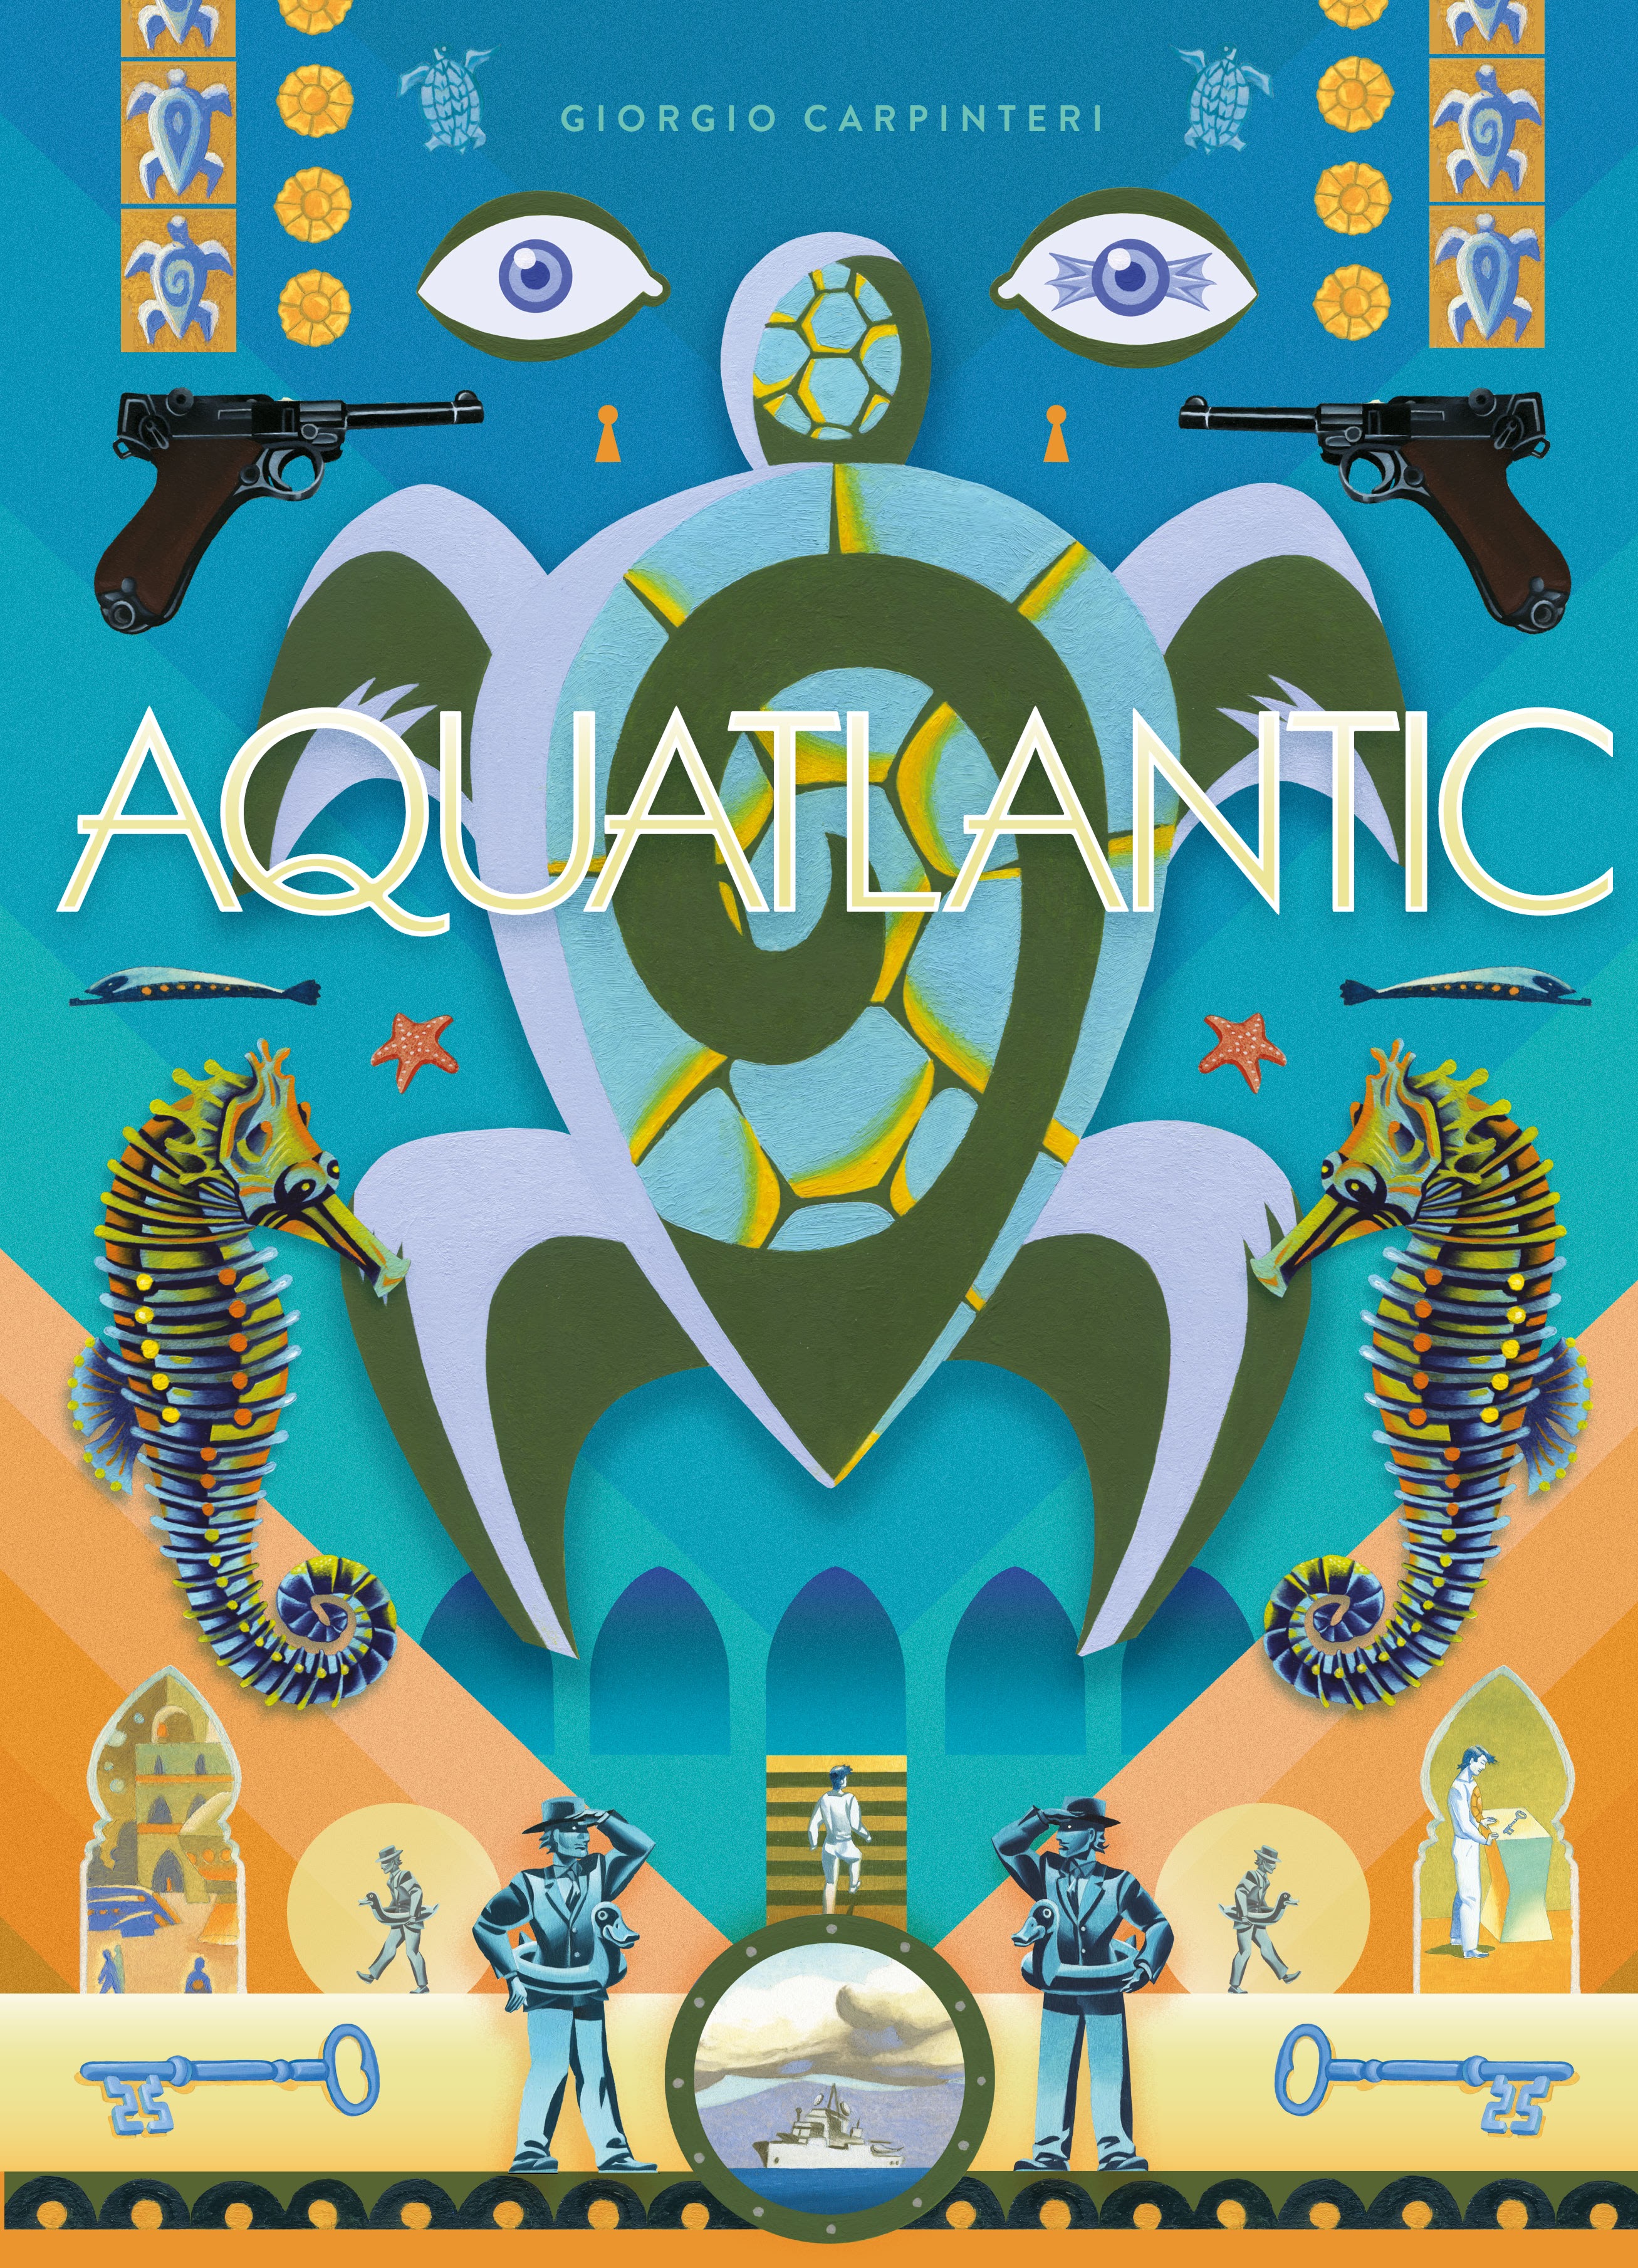 Read online Aquatlantic comic -  Issue # Full - 1